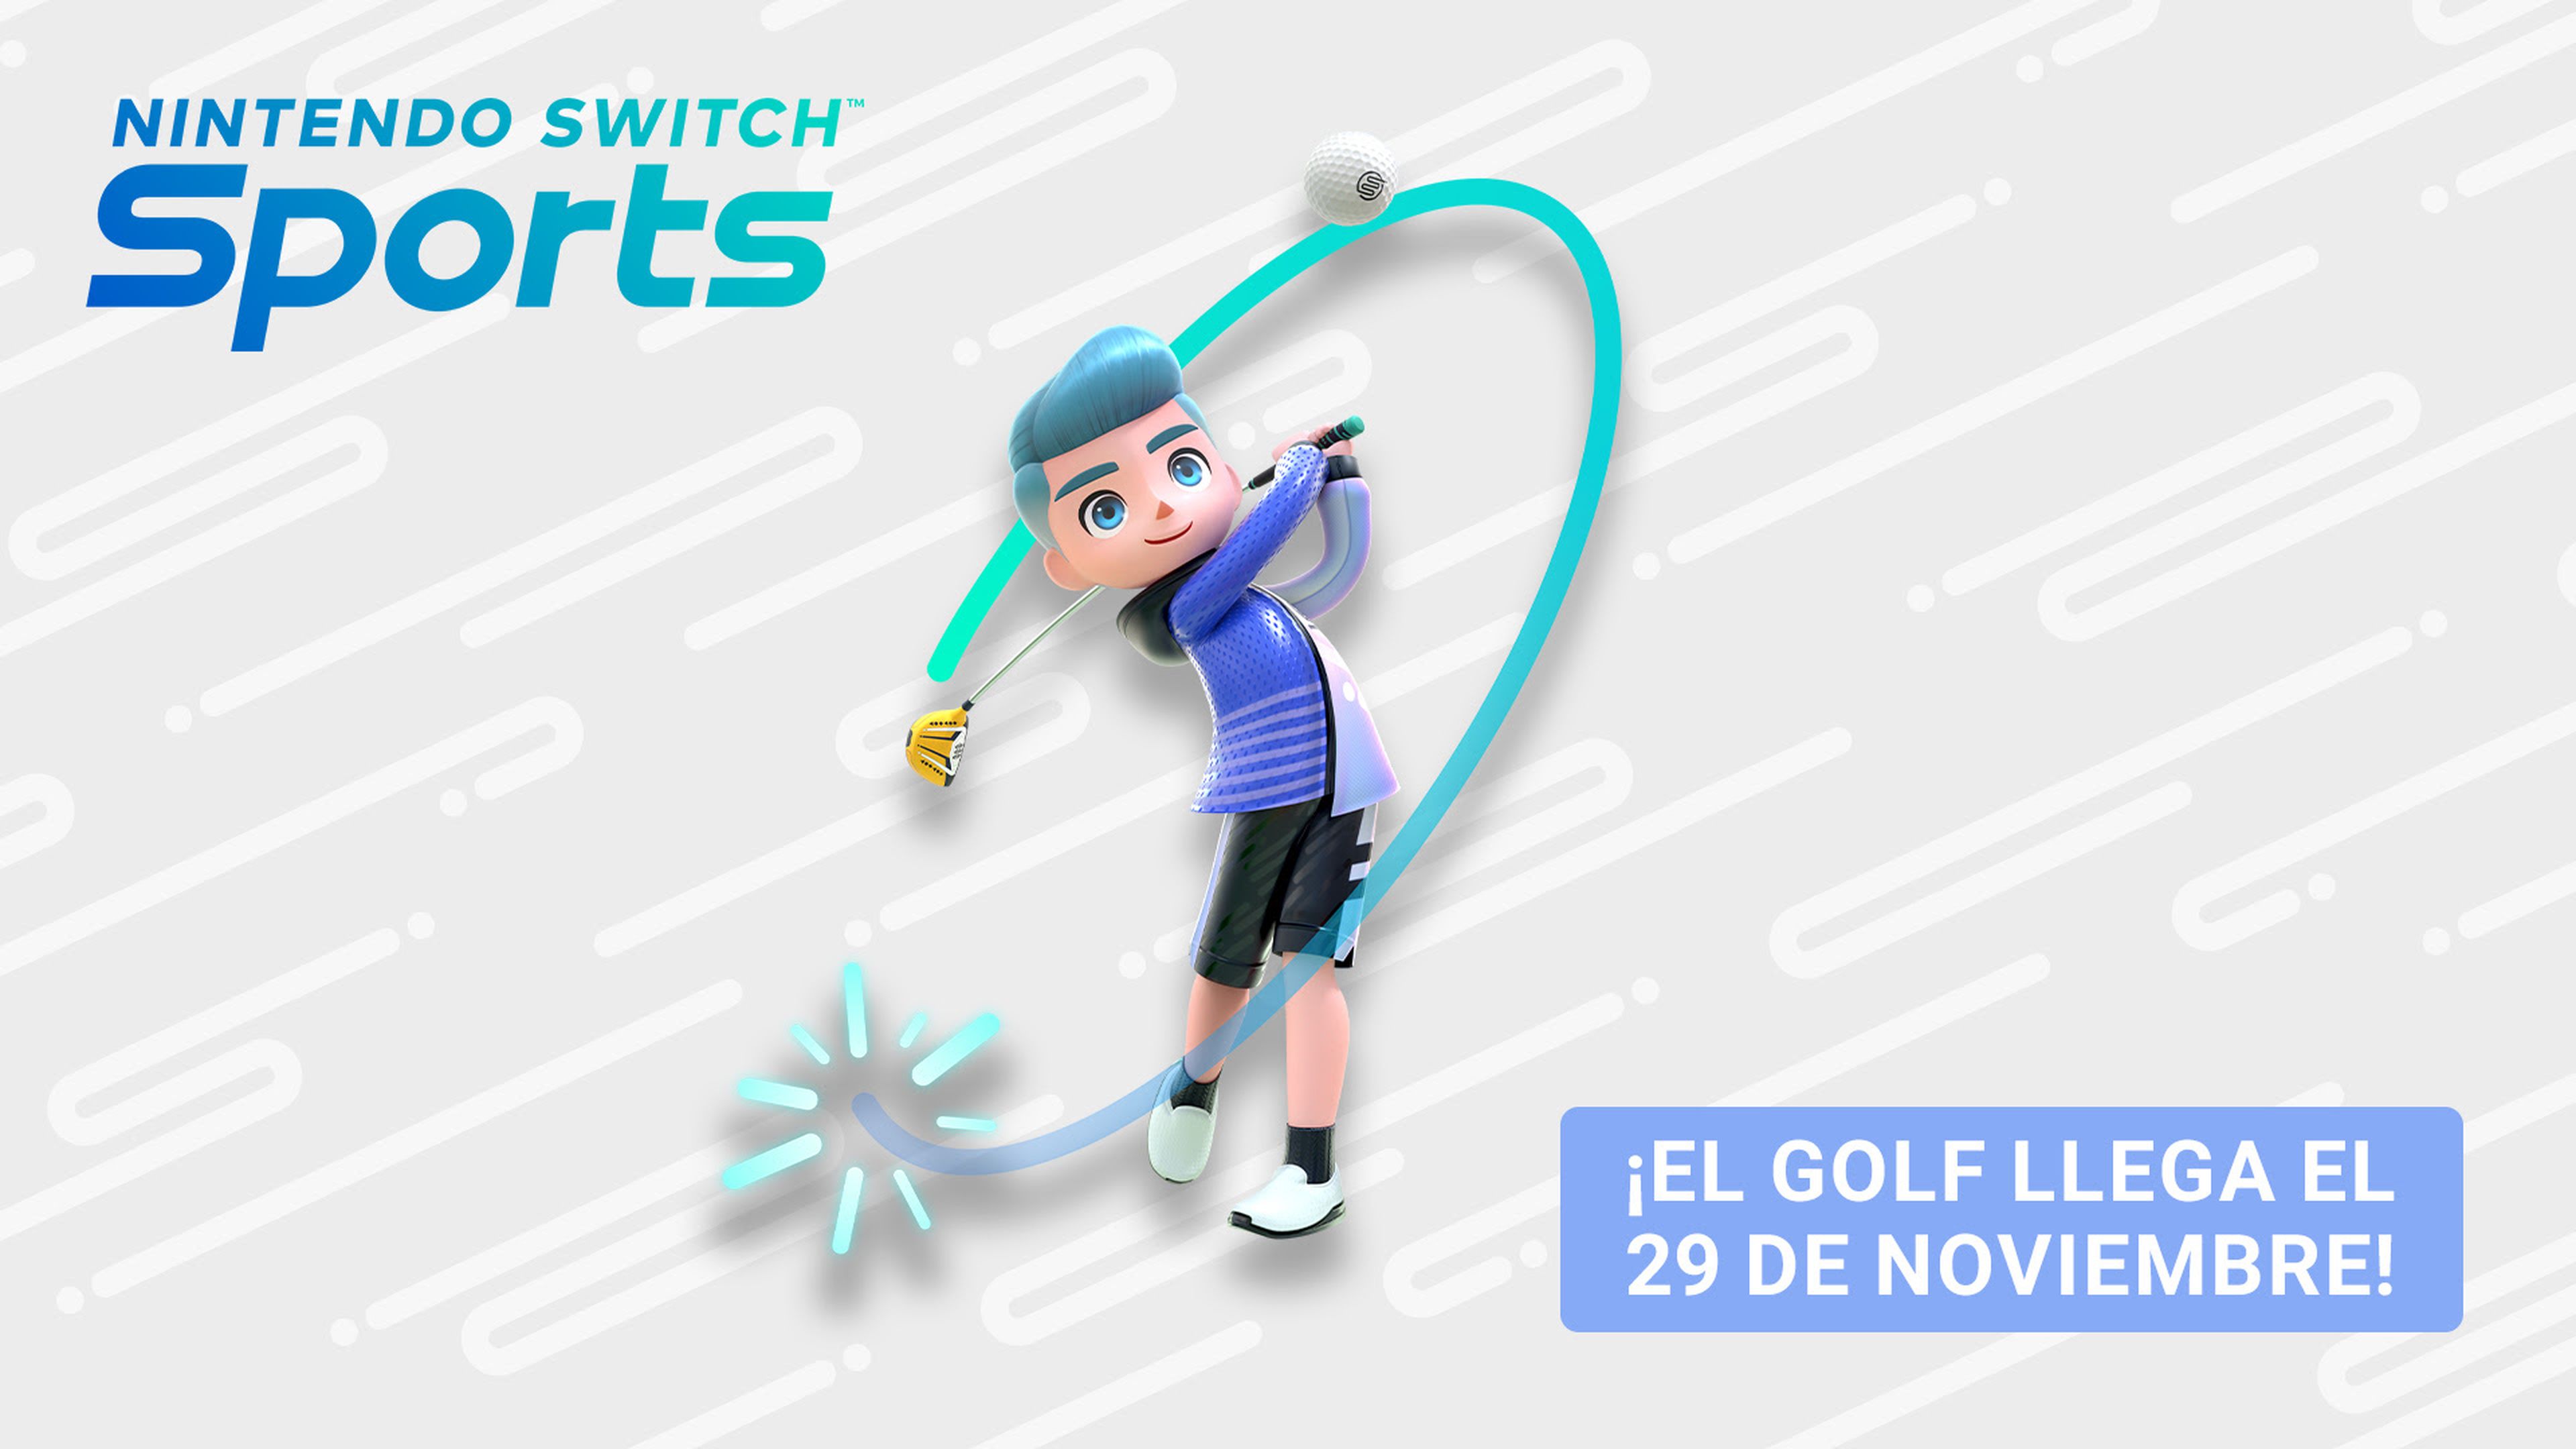 Nintendo Switch Sports golf